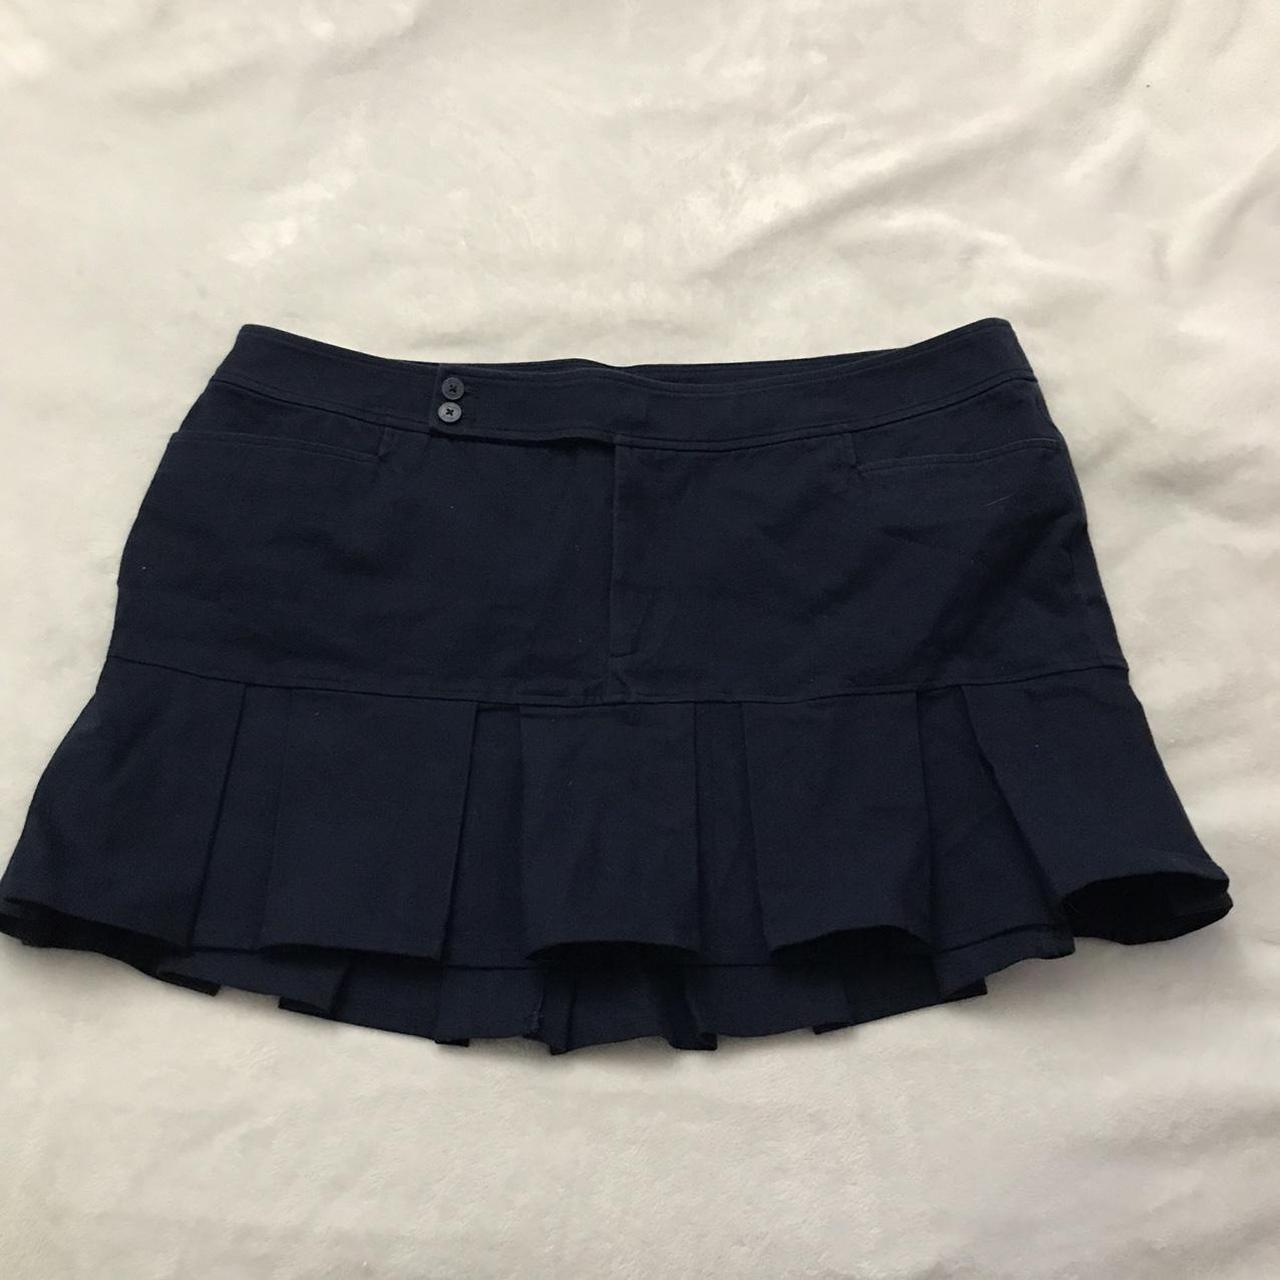 Custom made half pleated navy blue skirt can’t be... - Depop